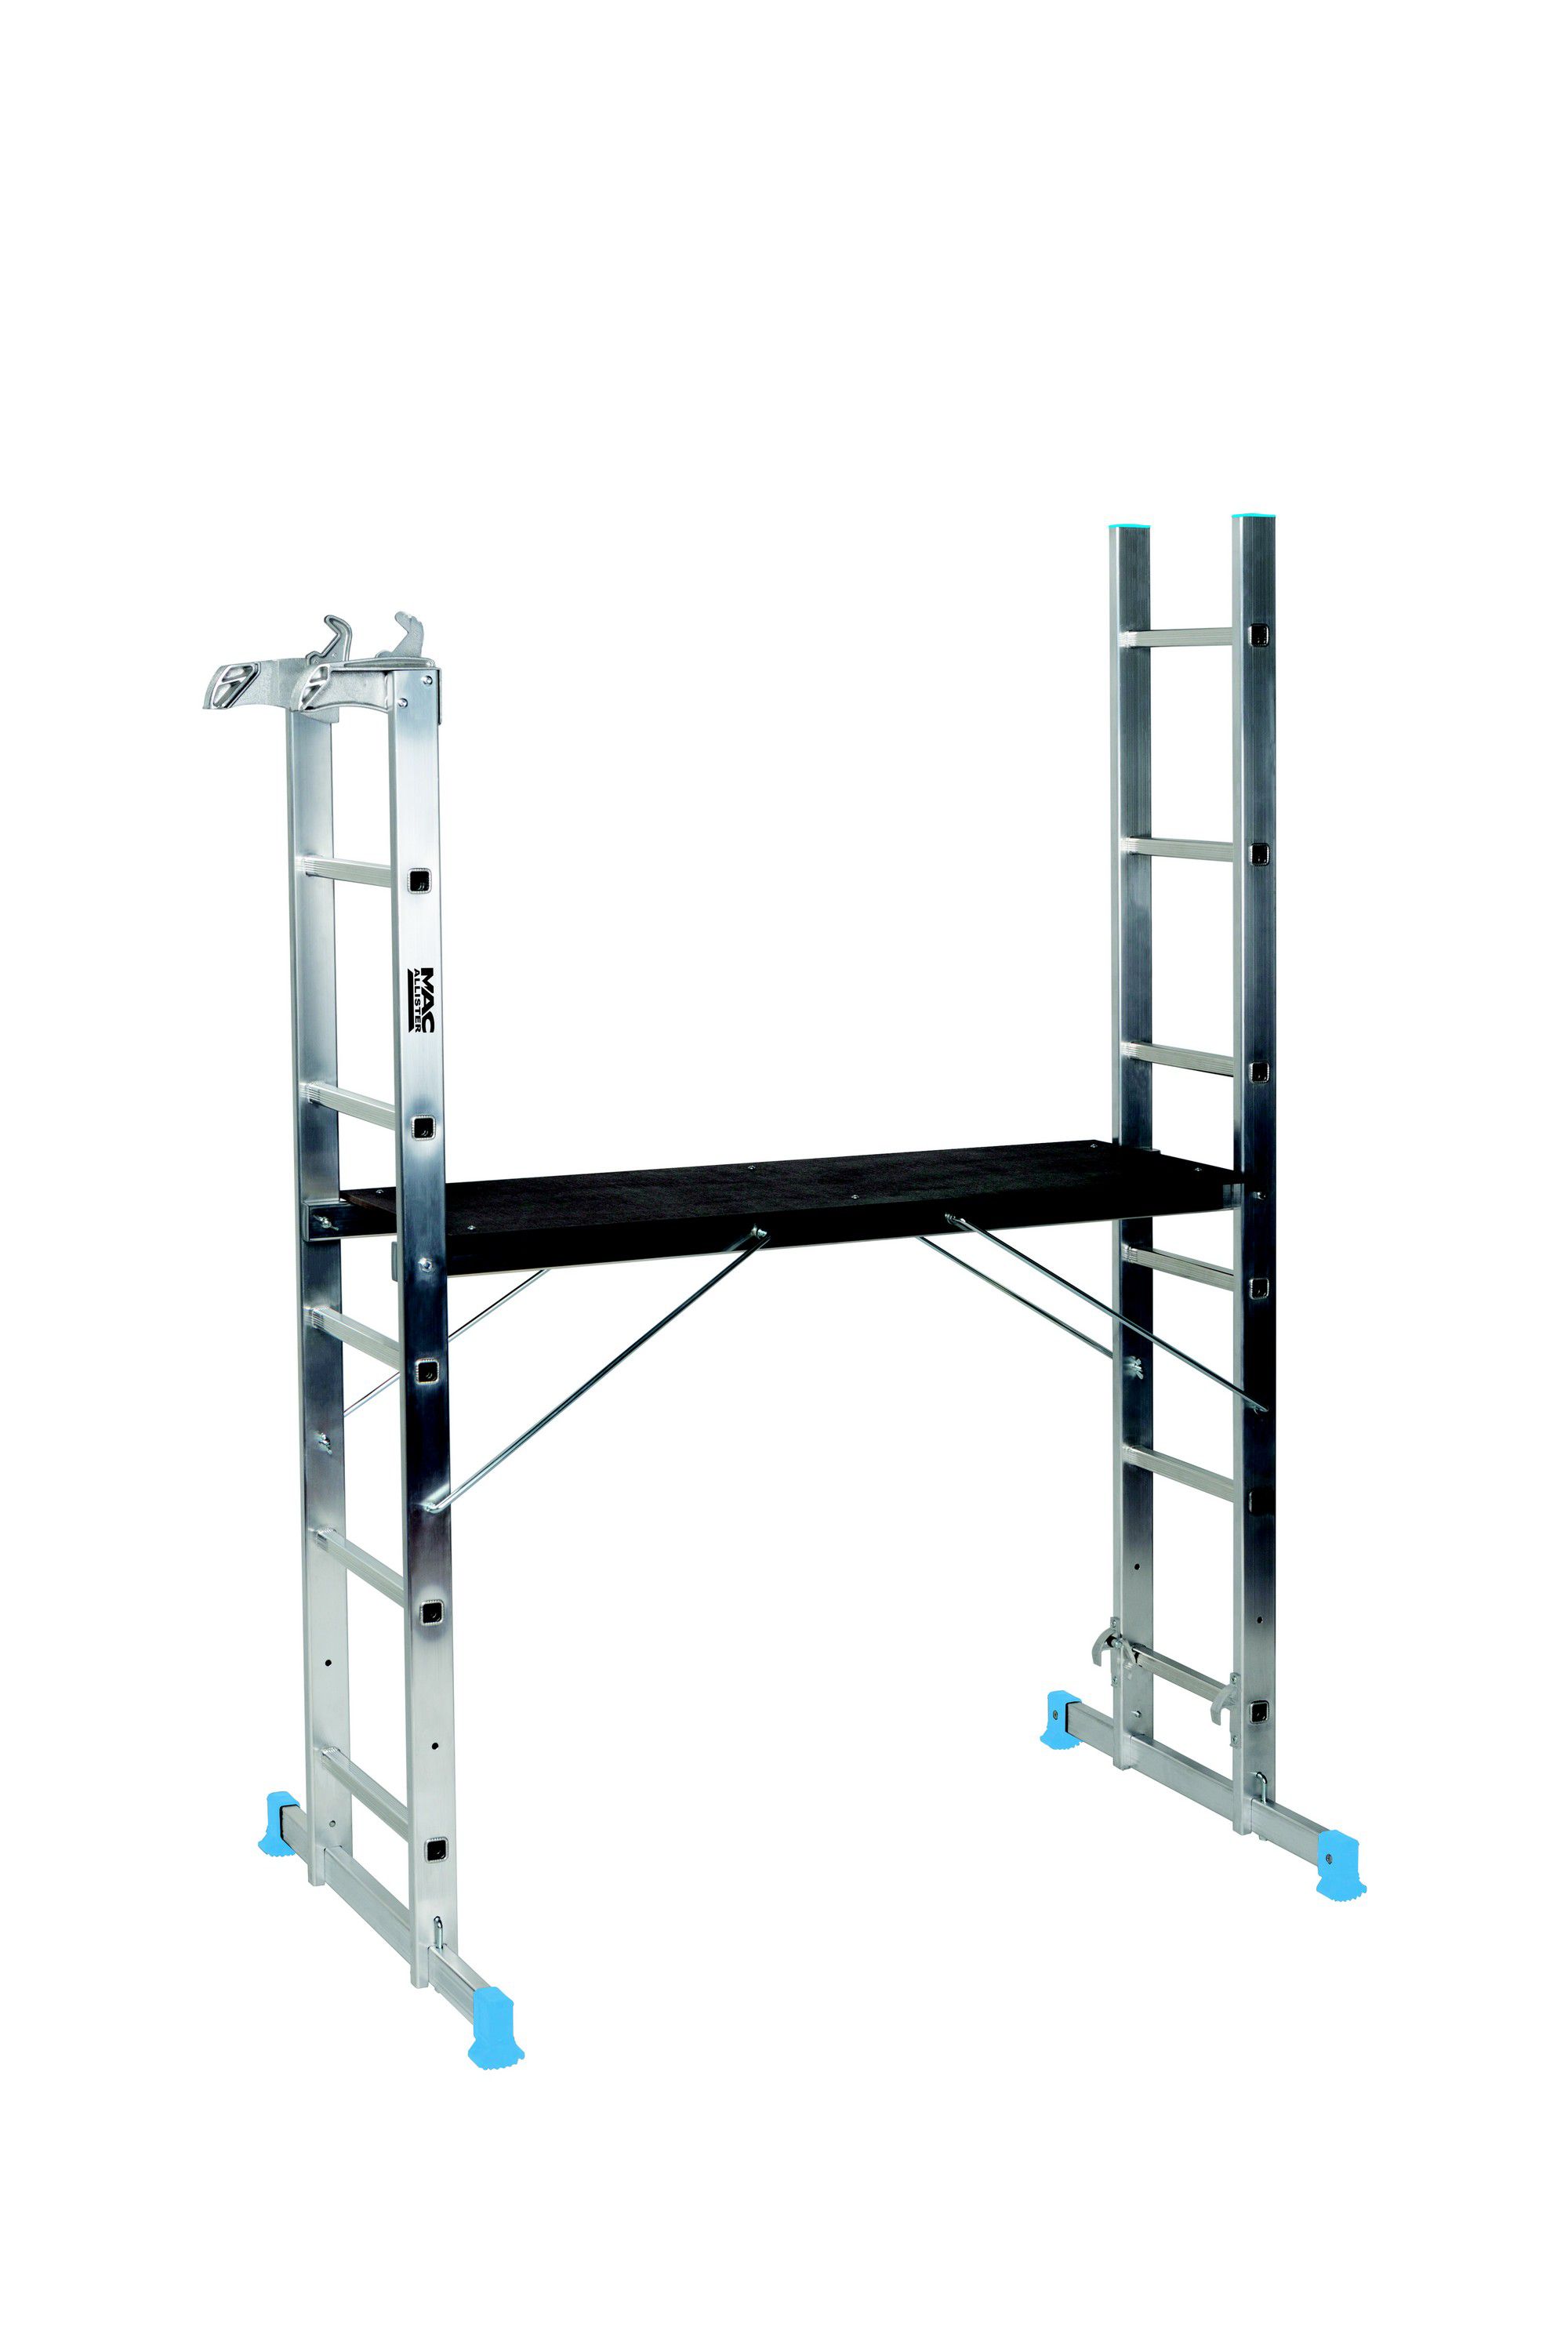 Mac Allister 3-way Aluminium Combination Ladder